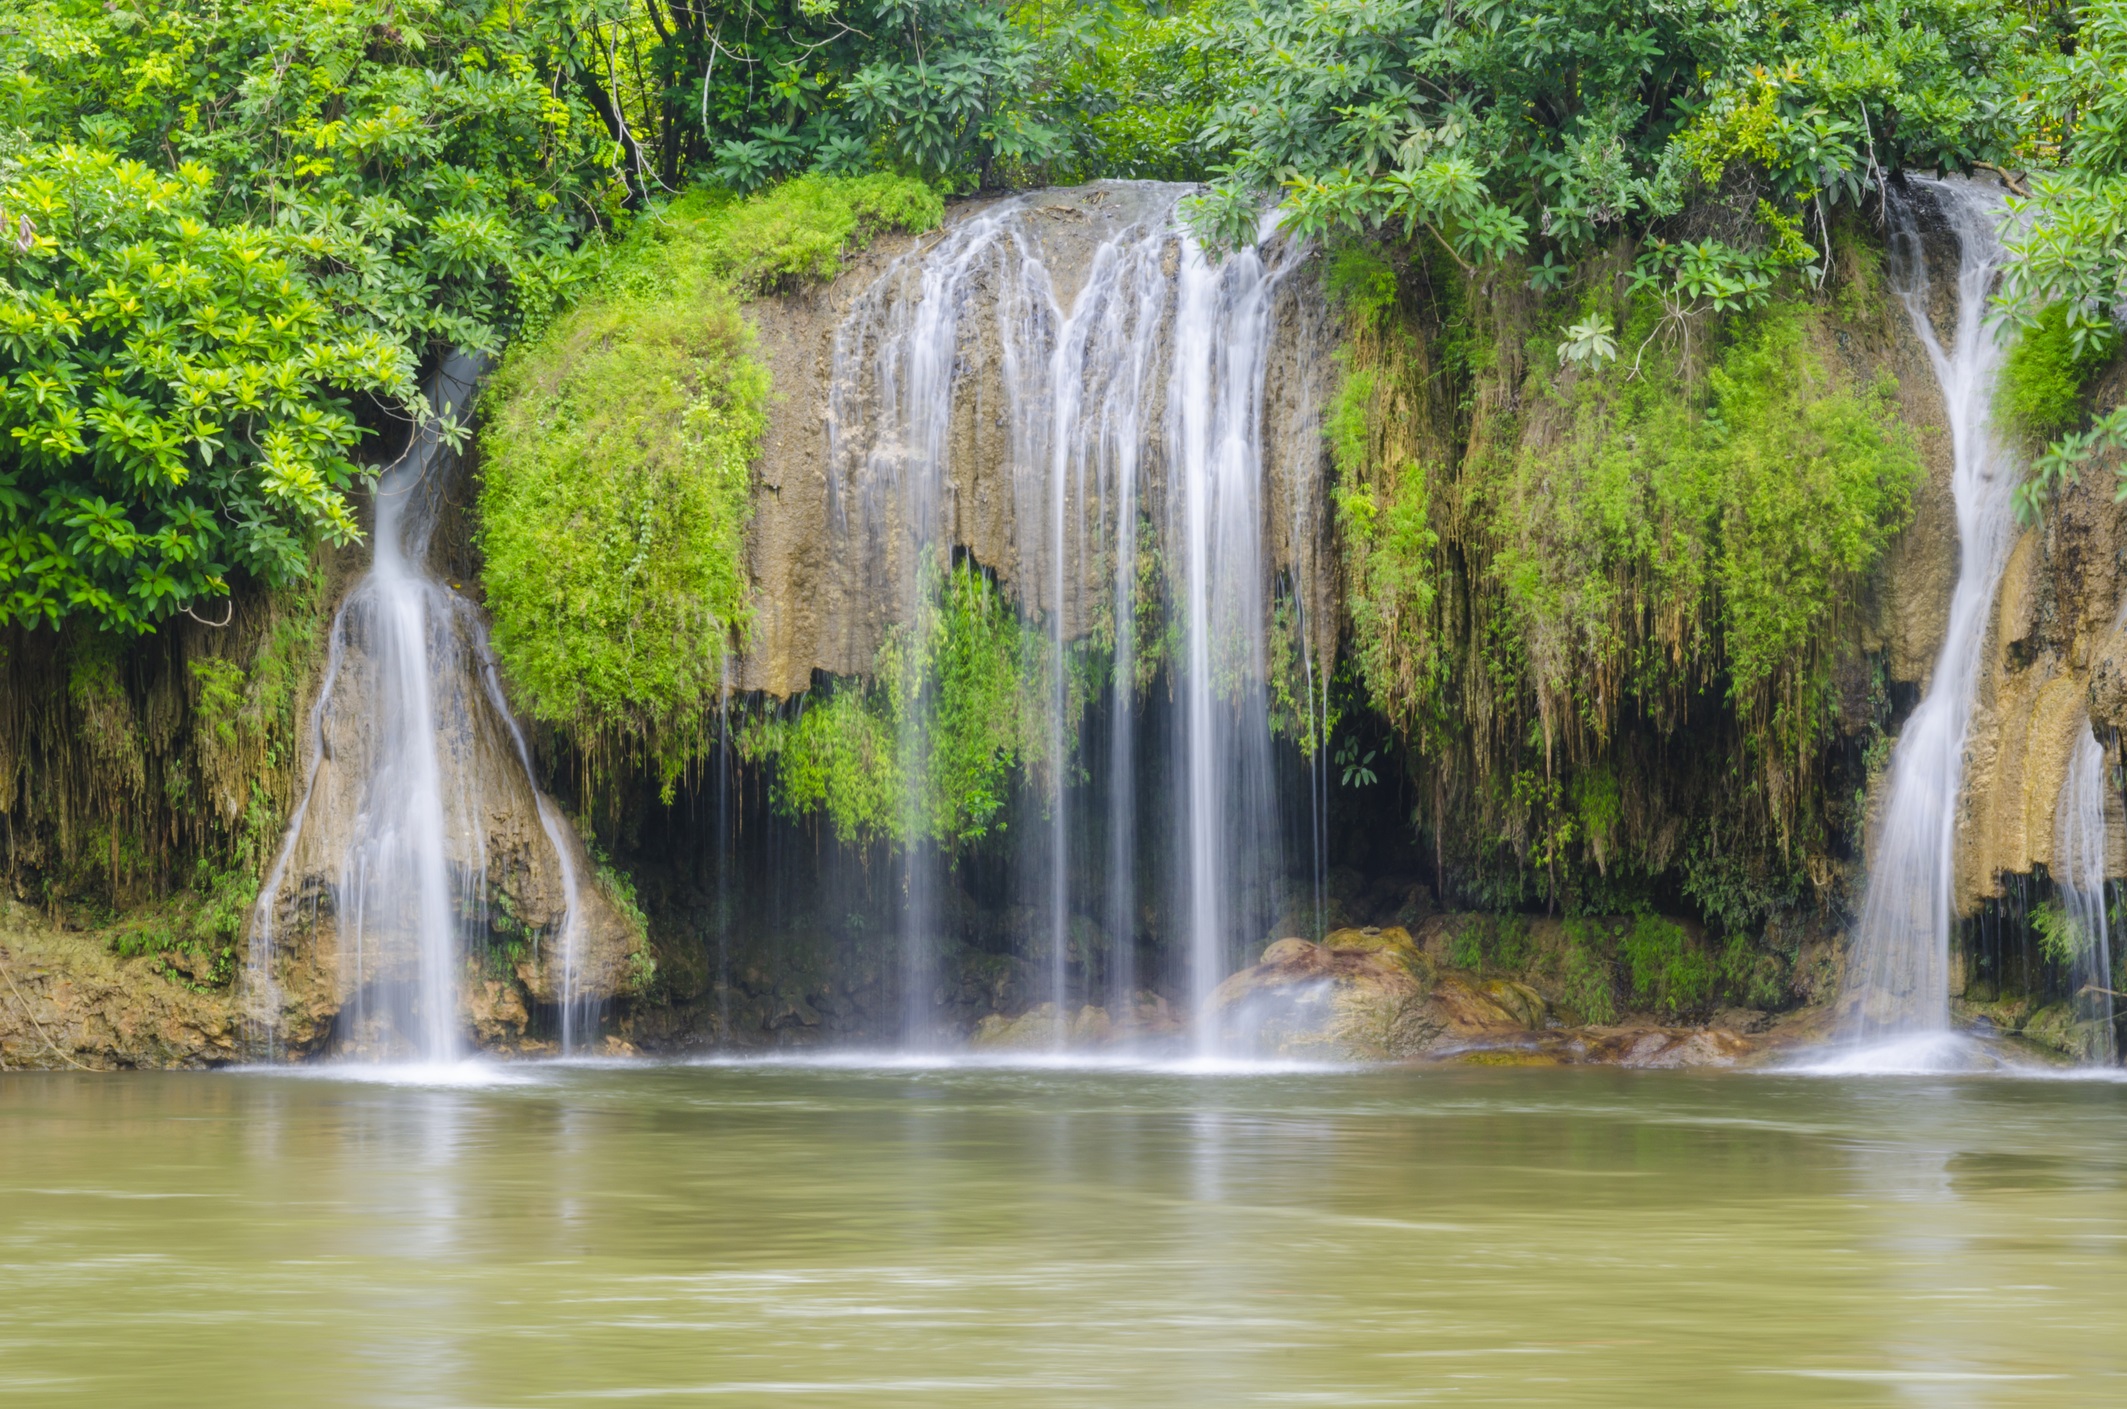 Sai Yok Yai waterfalls